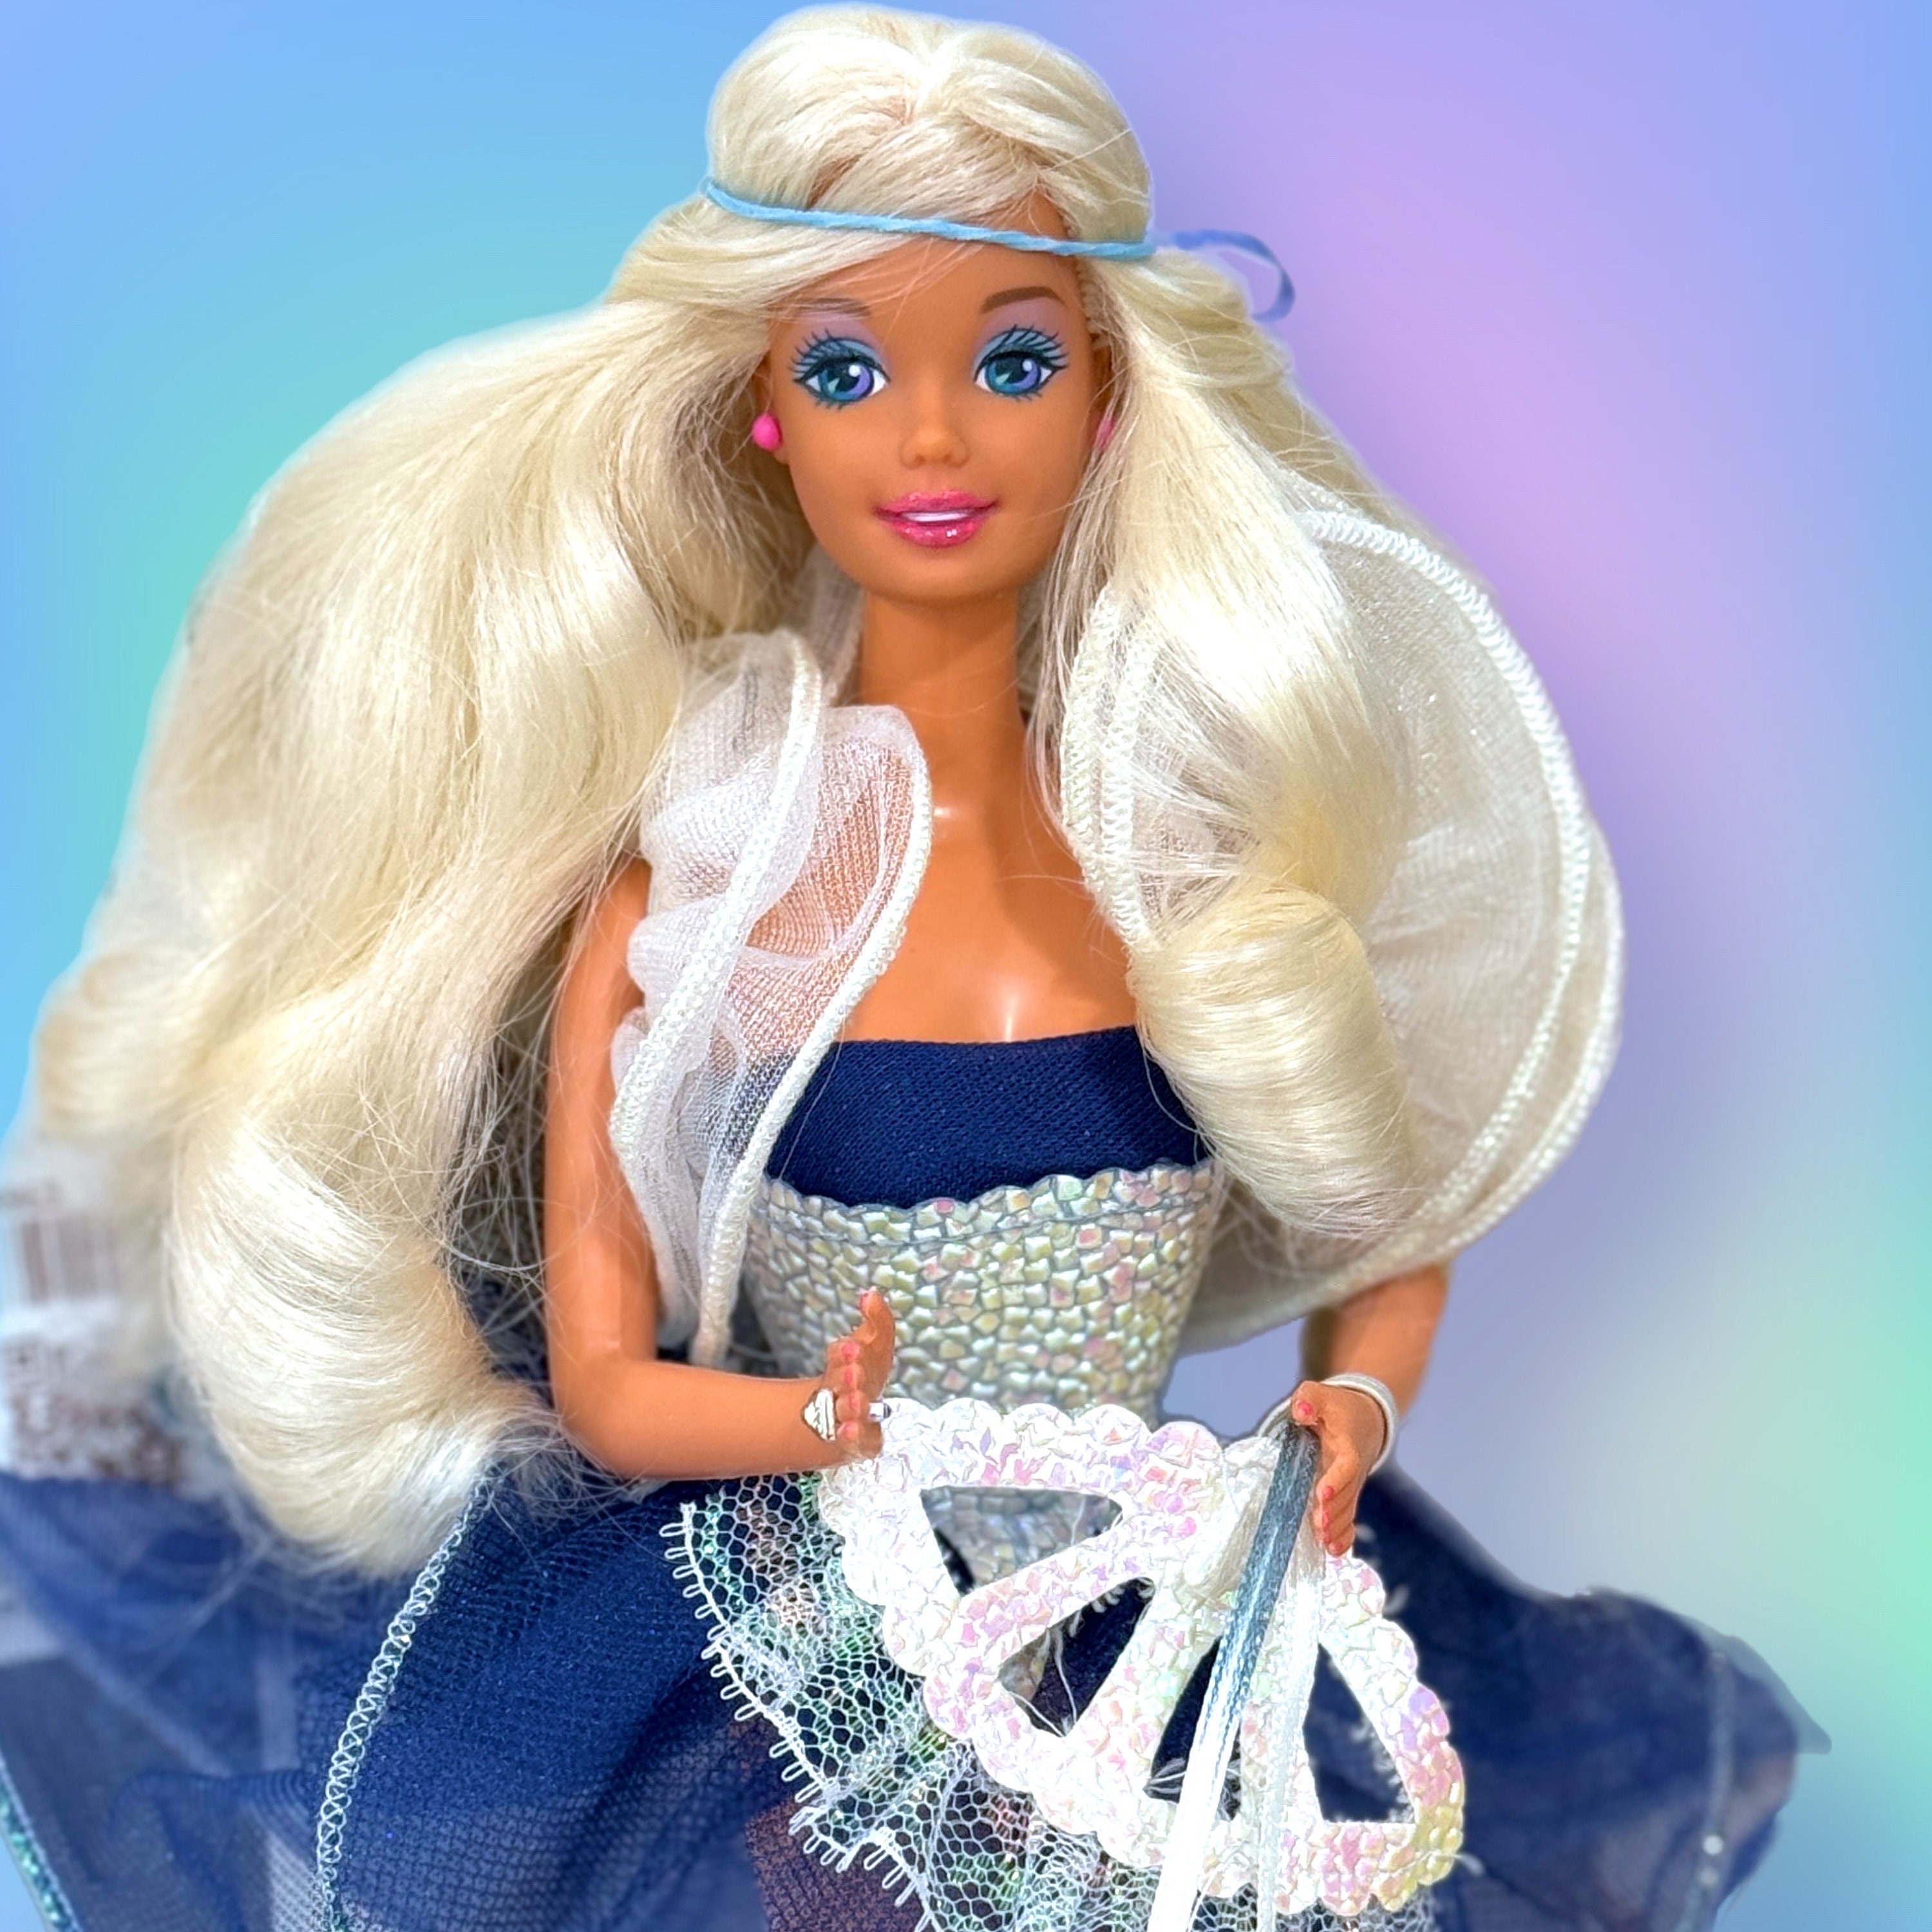 Custom Barbie Doll Vintage Barbie Clothes Purse 60s Clothes Articulated  Jointed Barbie Brown Eyes Hybrid Curvy Barbie Black Barbie AA Barbie 